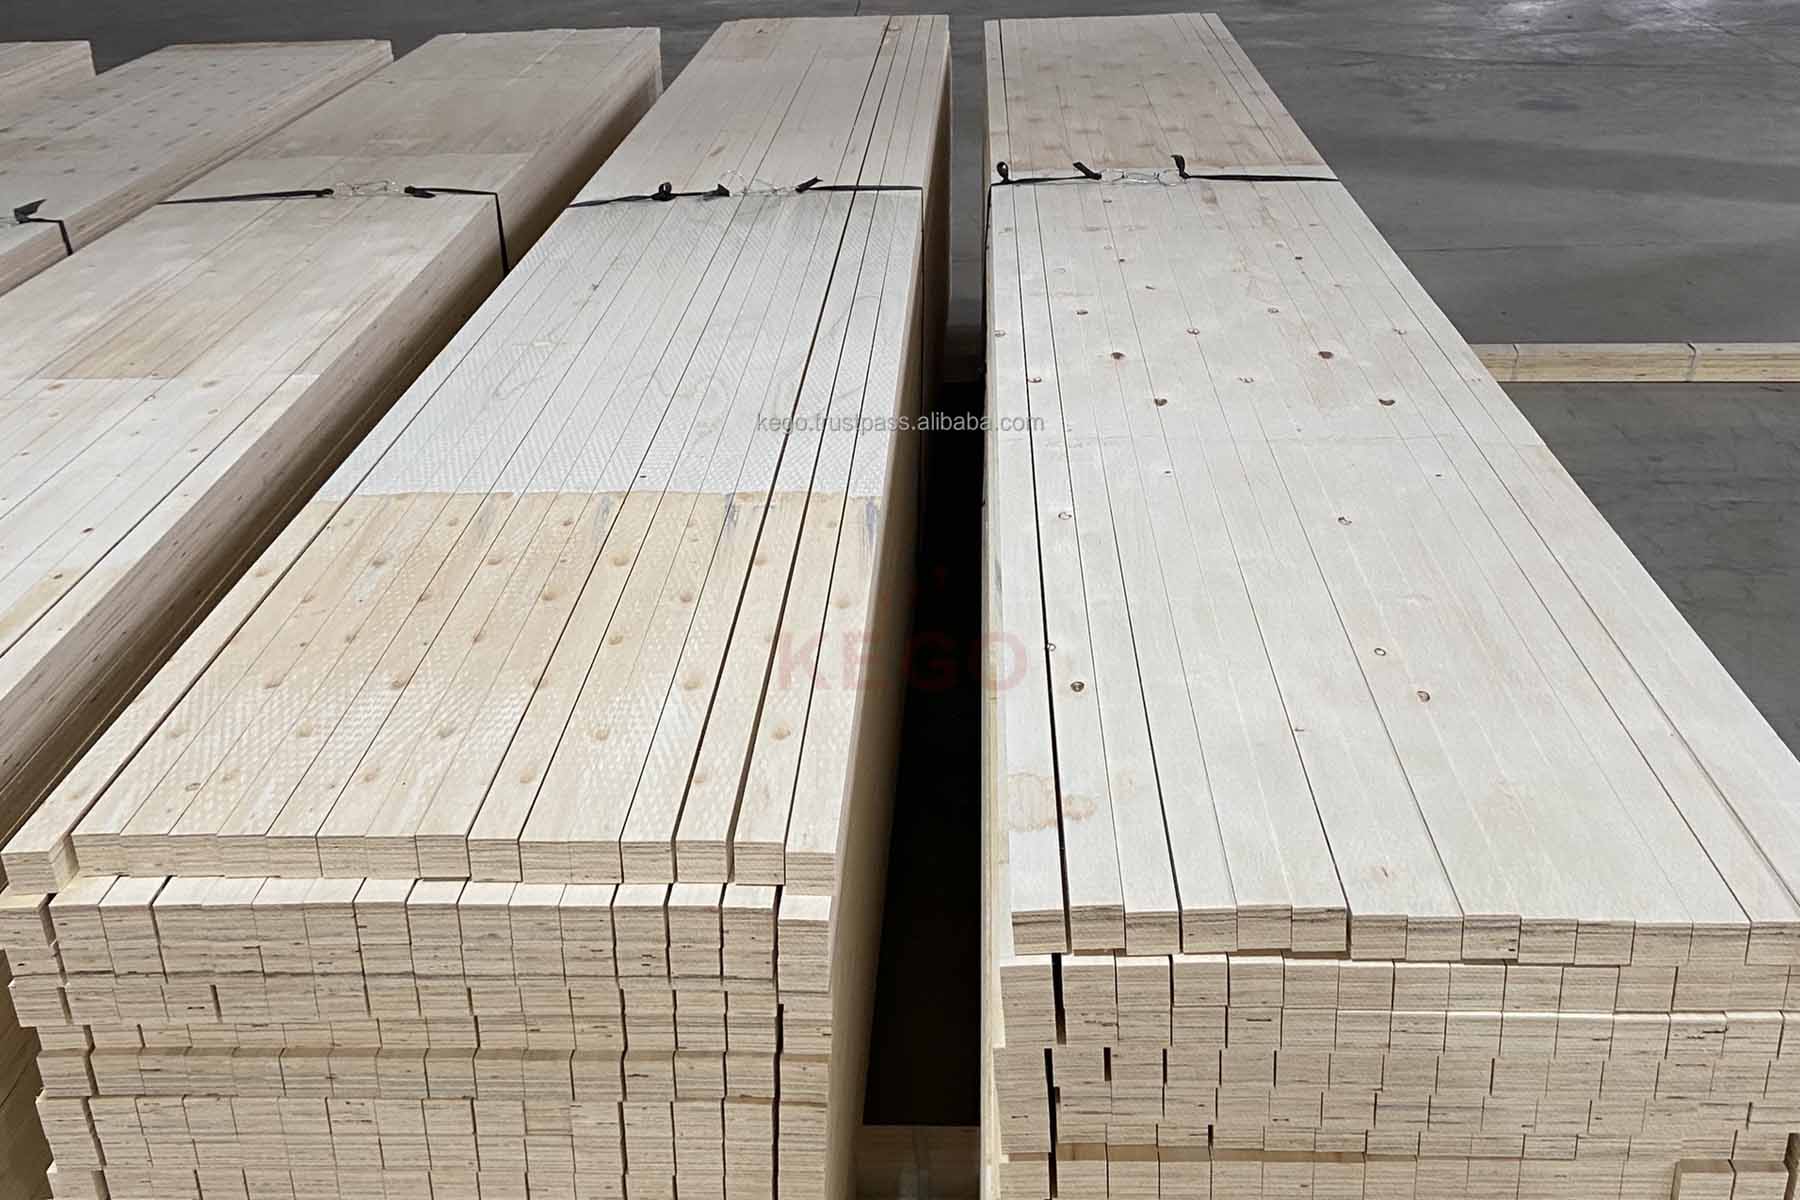 https://kego.com.vn/wp-content/uploads/2015/09/laminated-veneer-lumber-lvl-kego-20.jpg